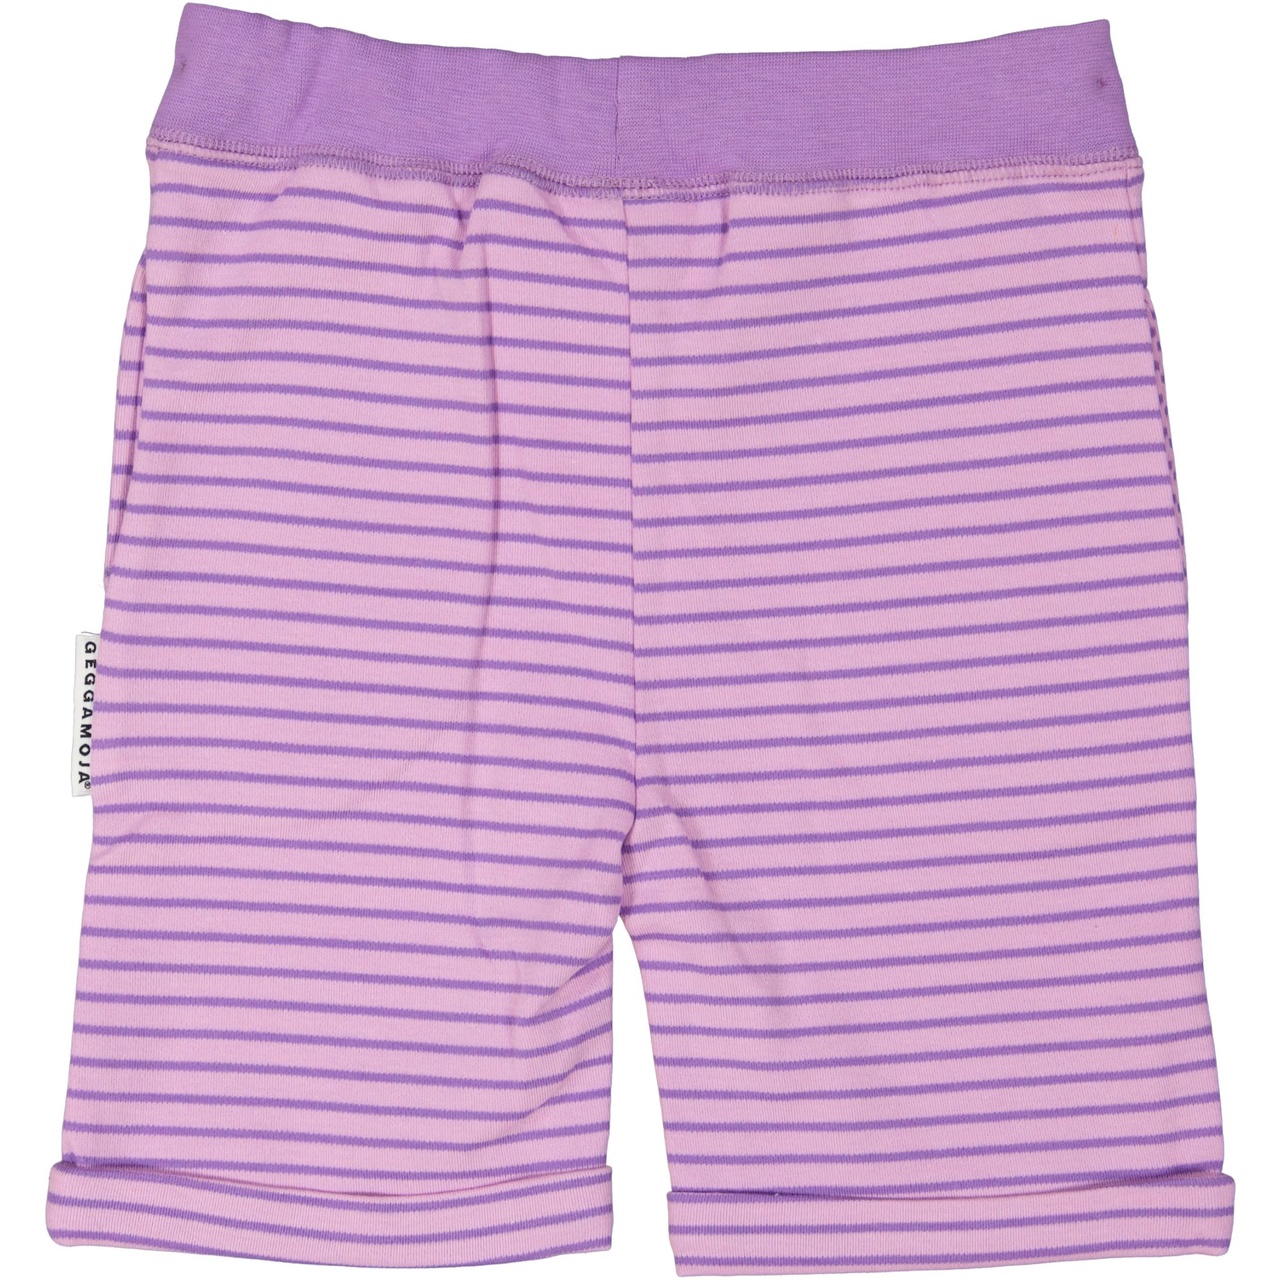 Shorts L.purple/purple  110/116